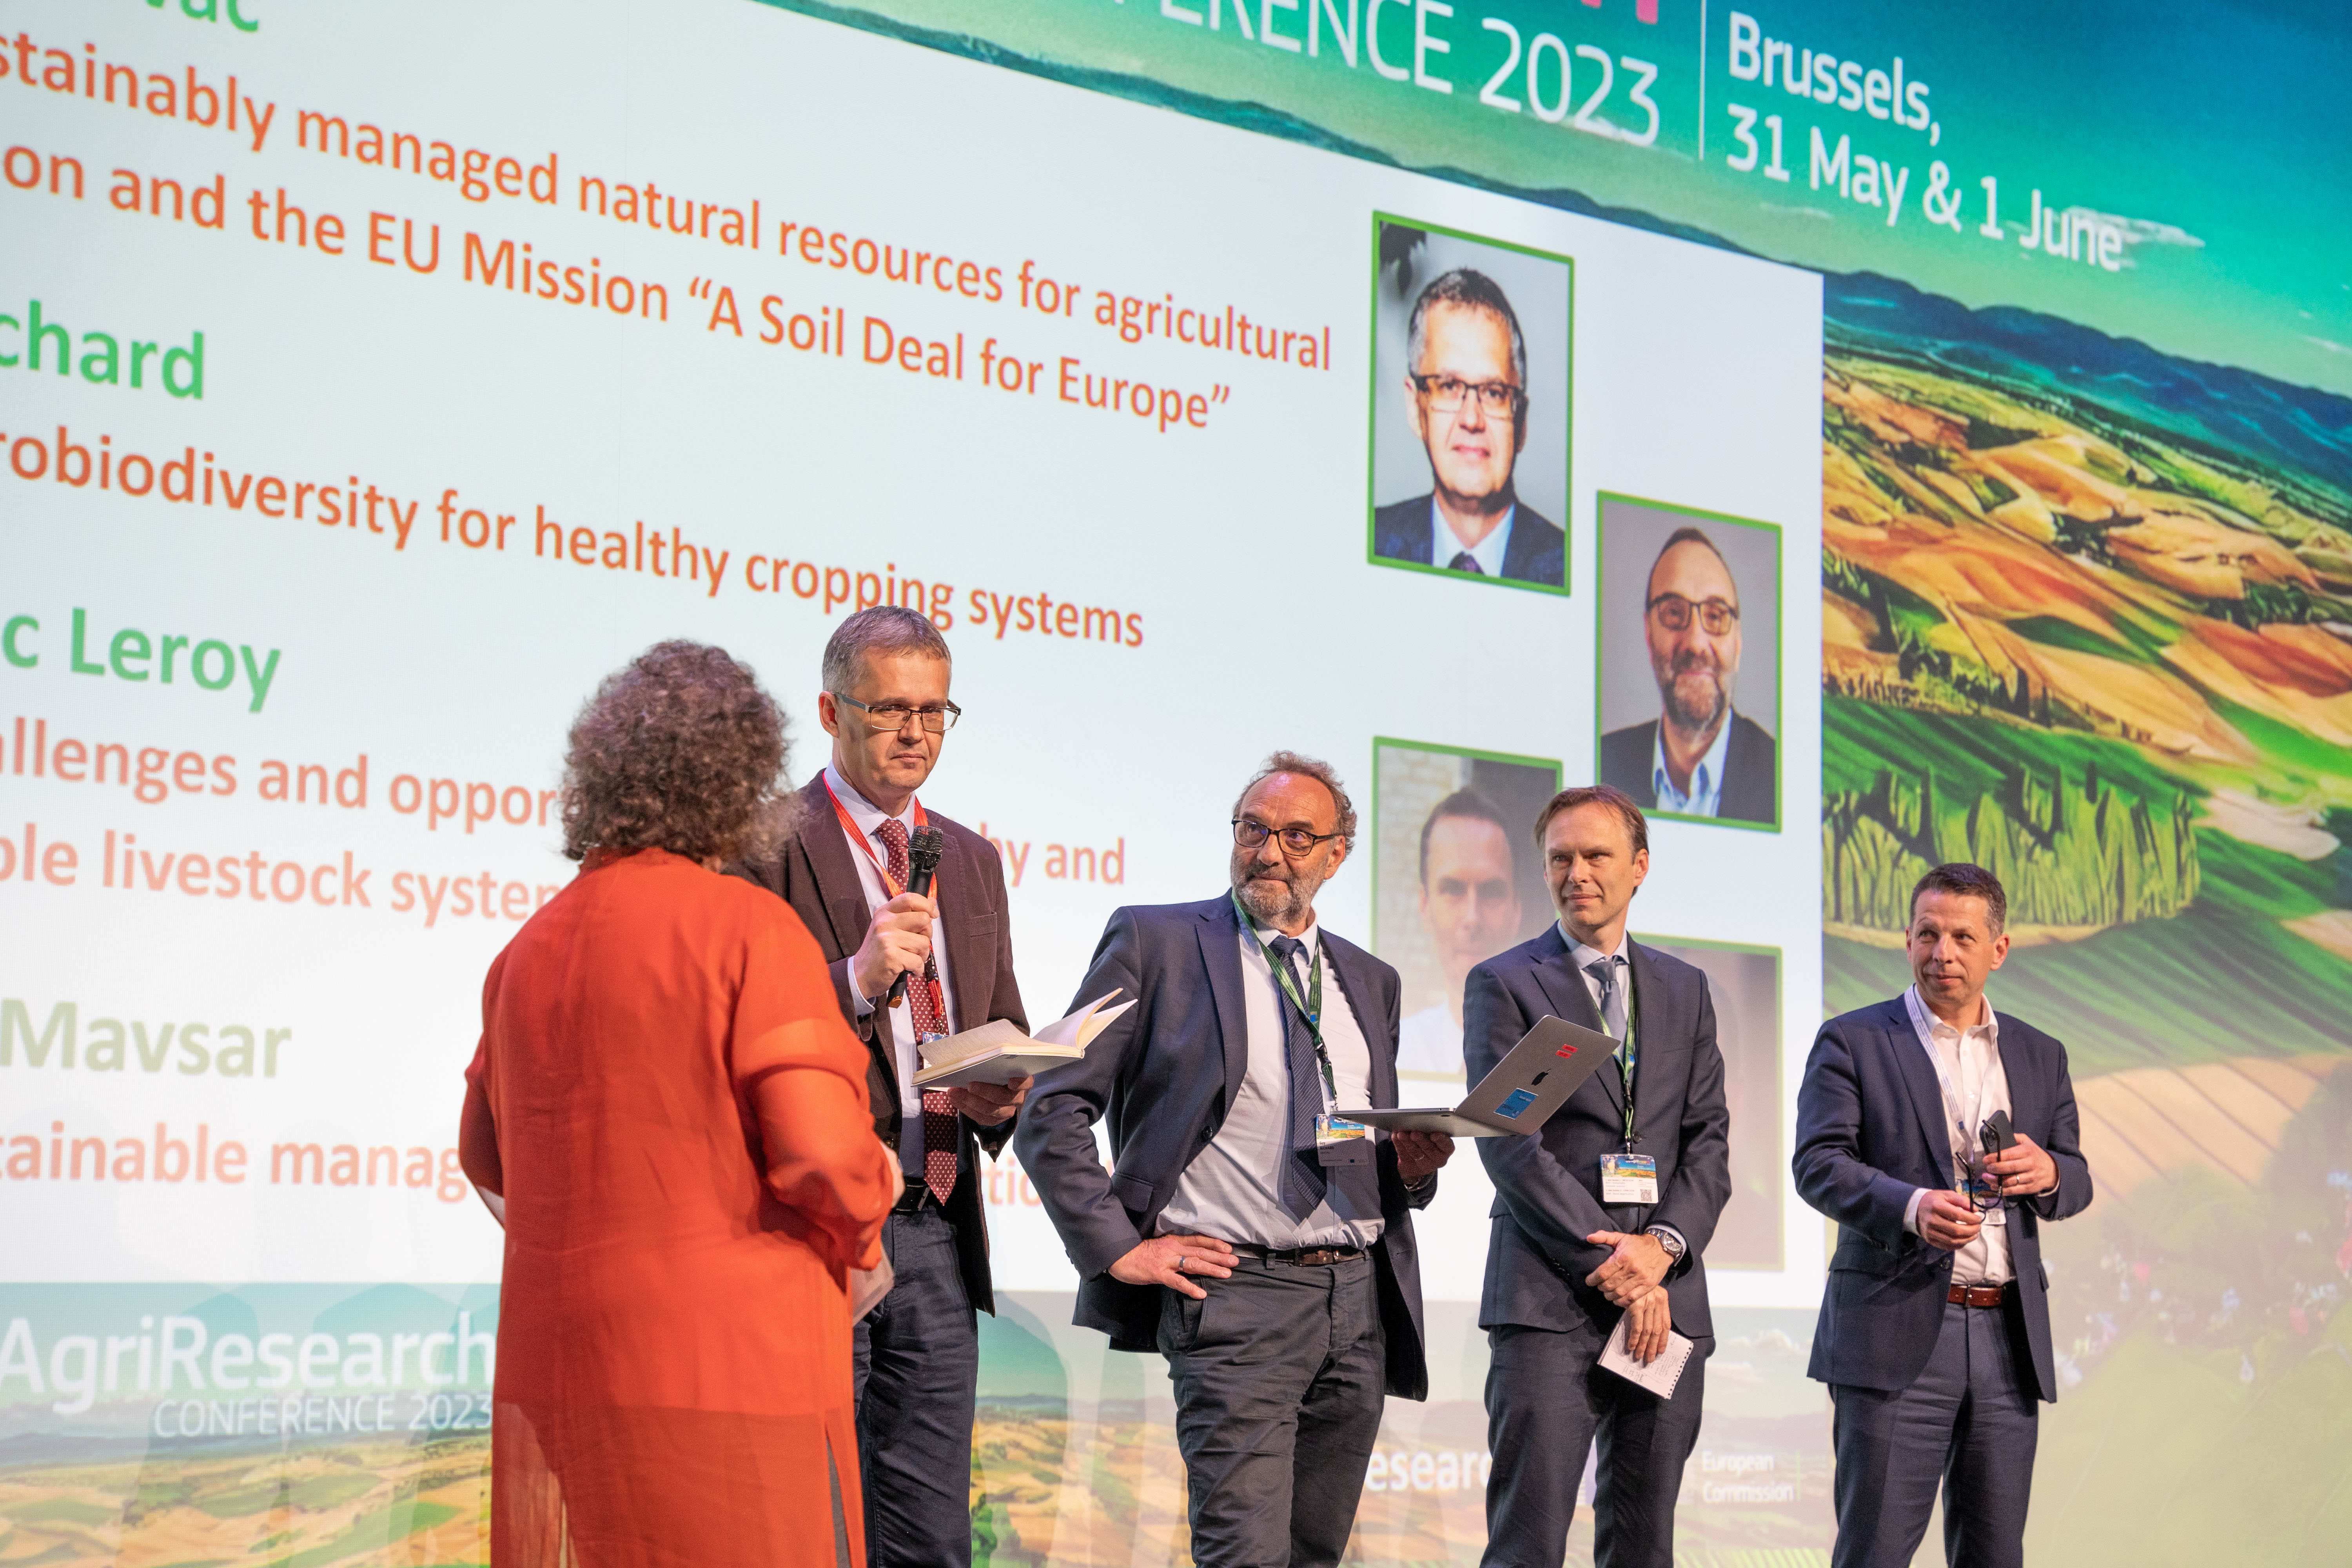 Tamsin Rose, Martin Kováč, Guy Richard, Frédéric Leroy, Robert Mavsar – 2023 EU AgriResearch Conference